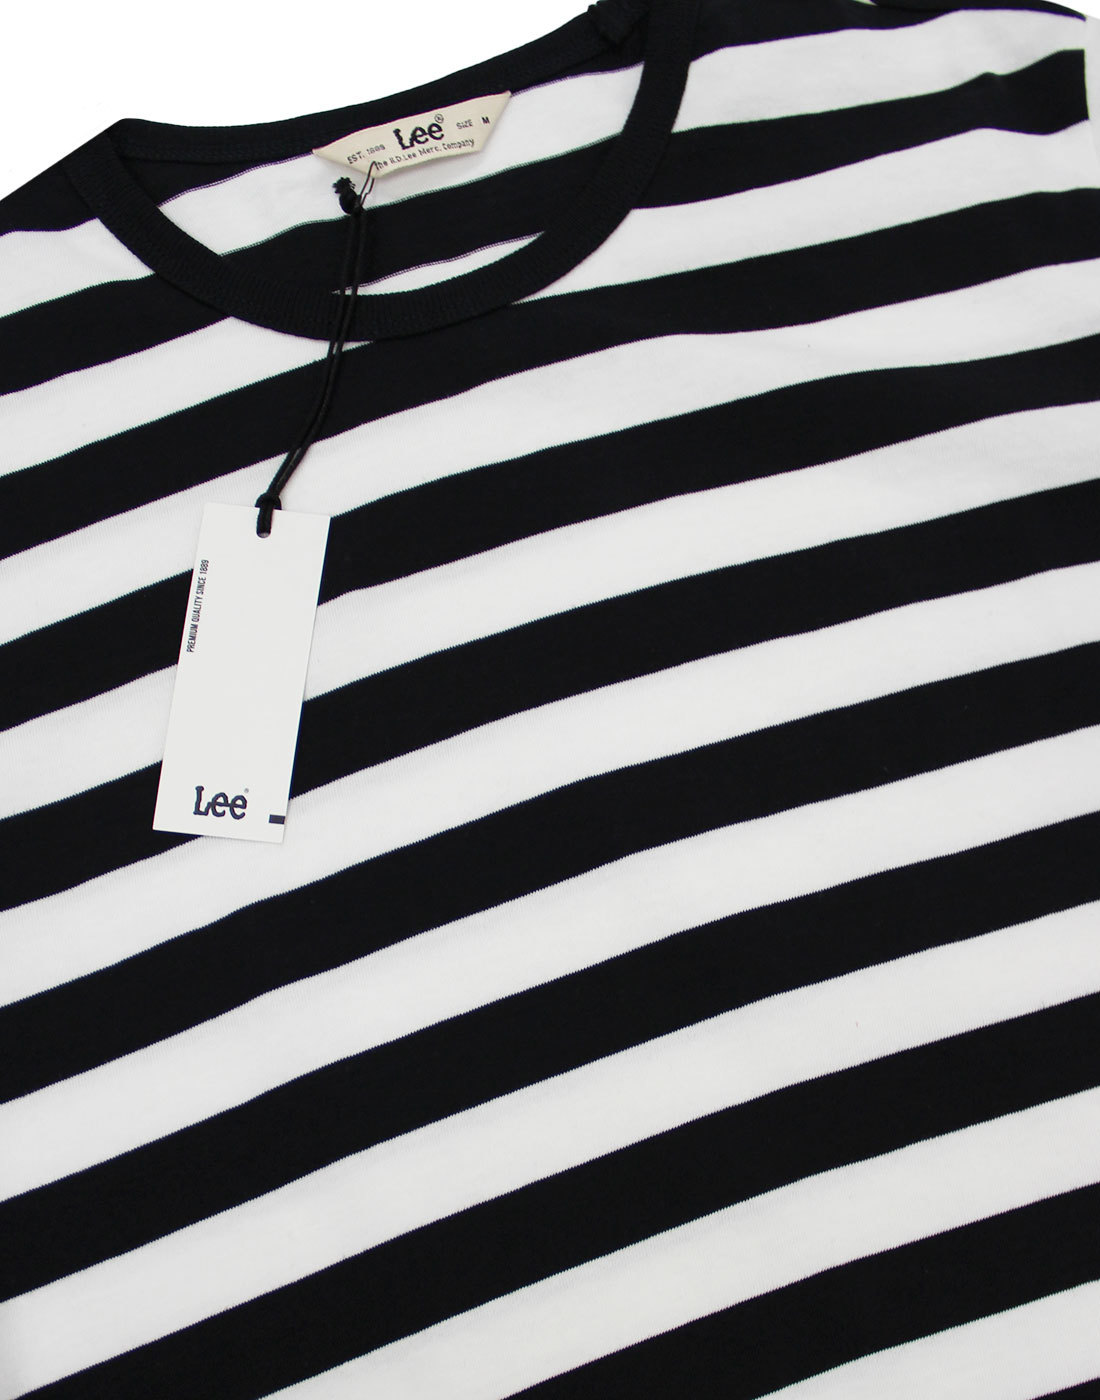 LEE Men's Retro 60s Mod Bold Stripe Crew Neck T-shirt Black/White